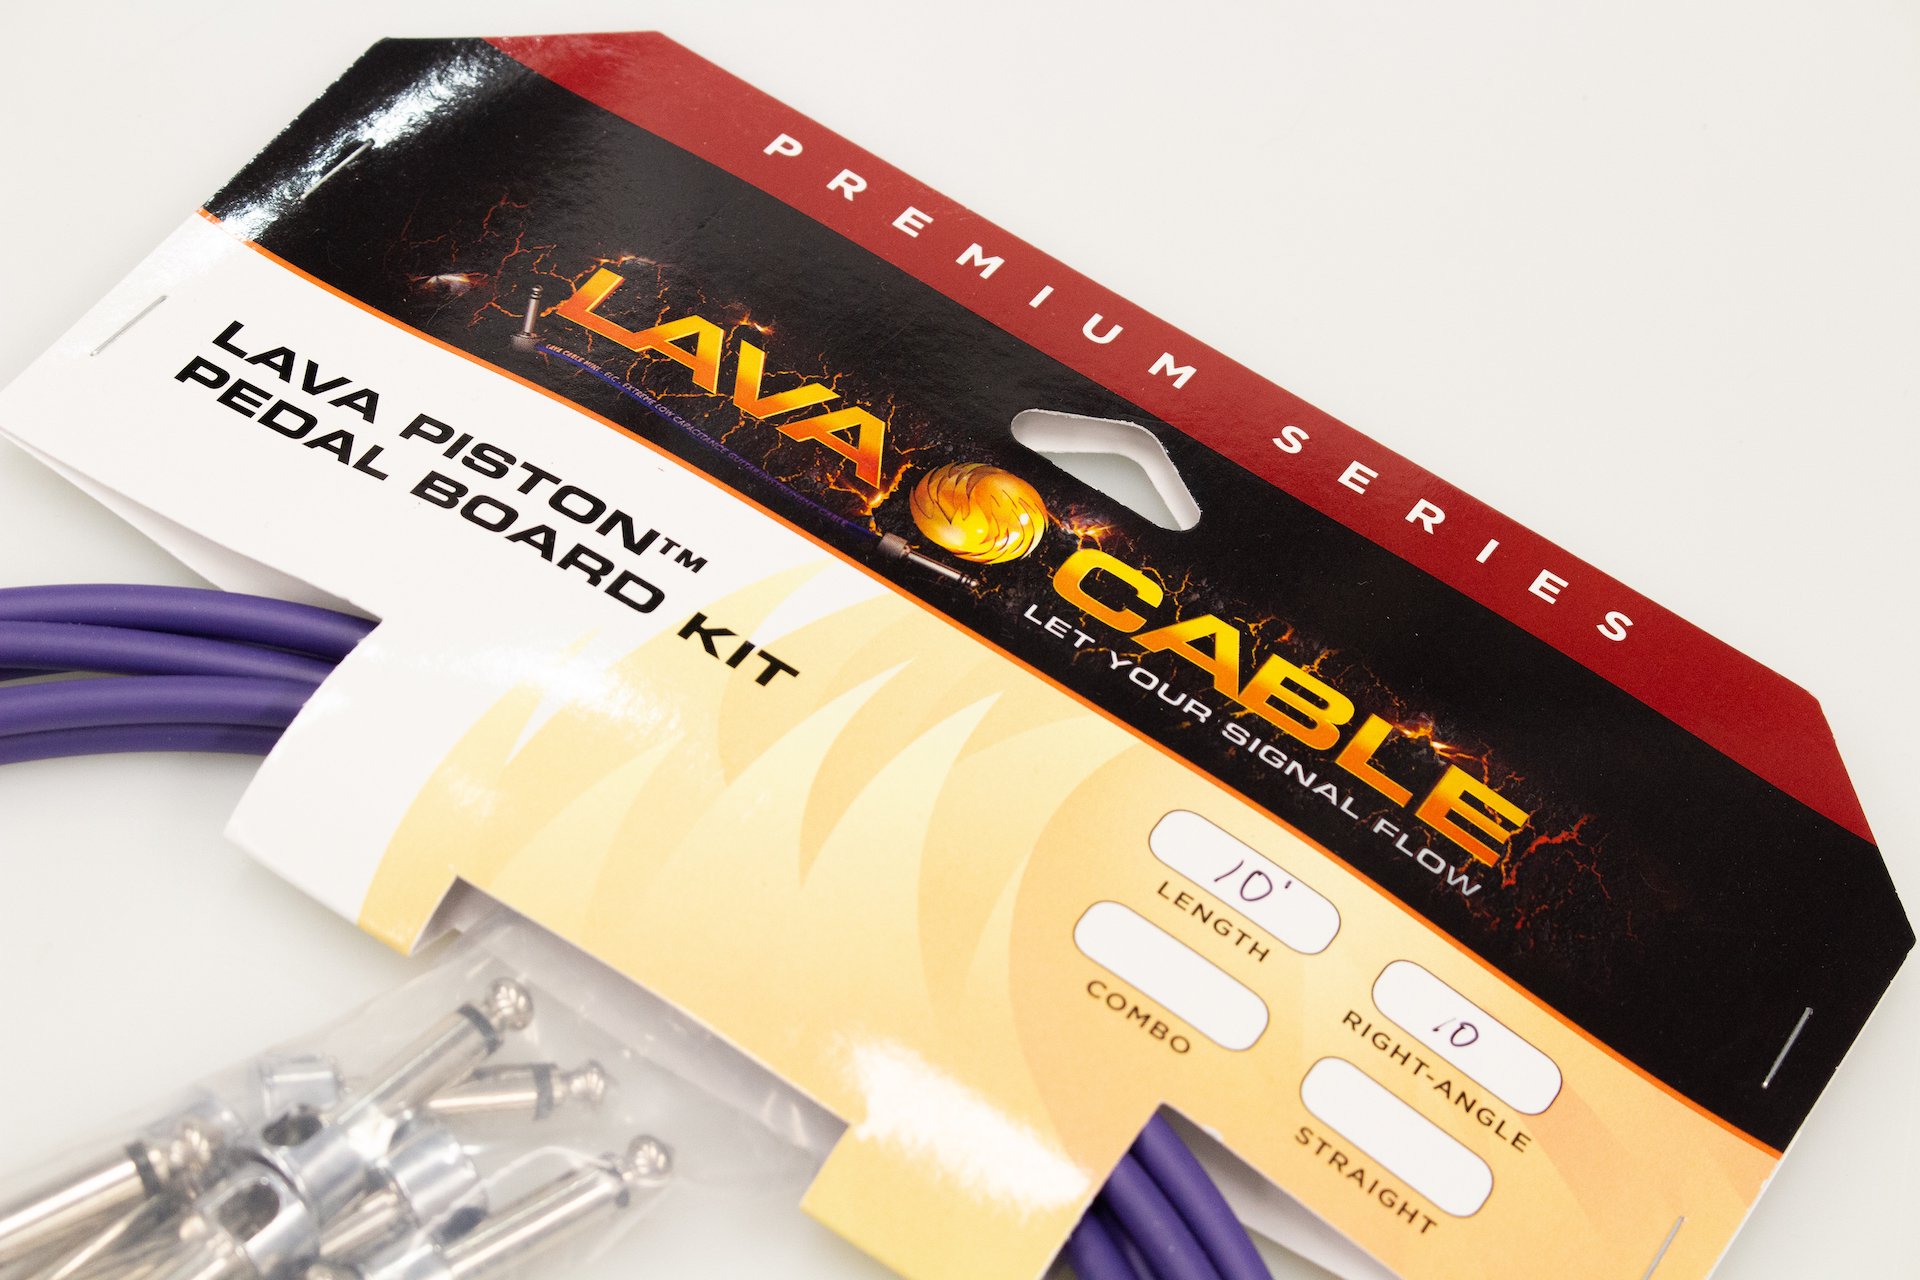 lava cable mini パッチケーブル セット シールド ギター